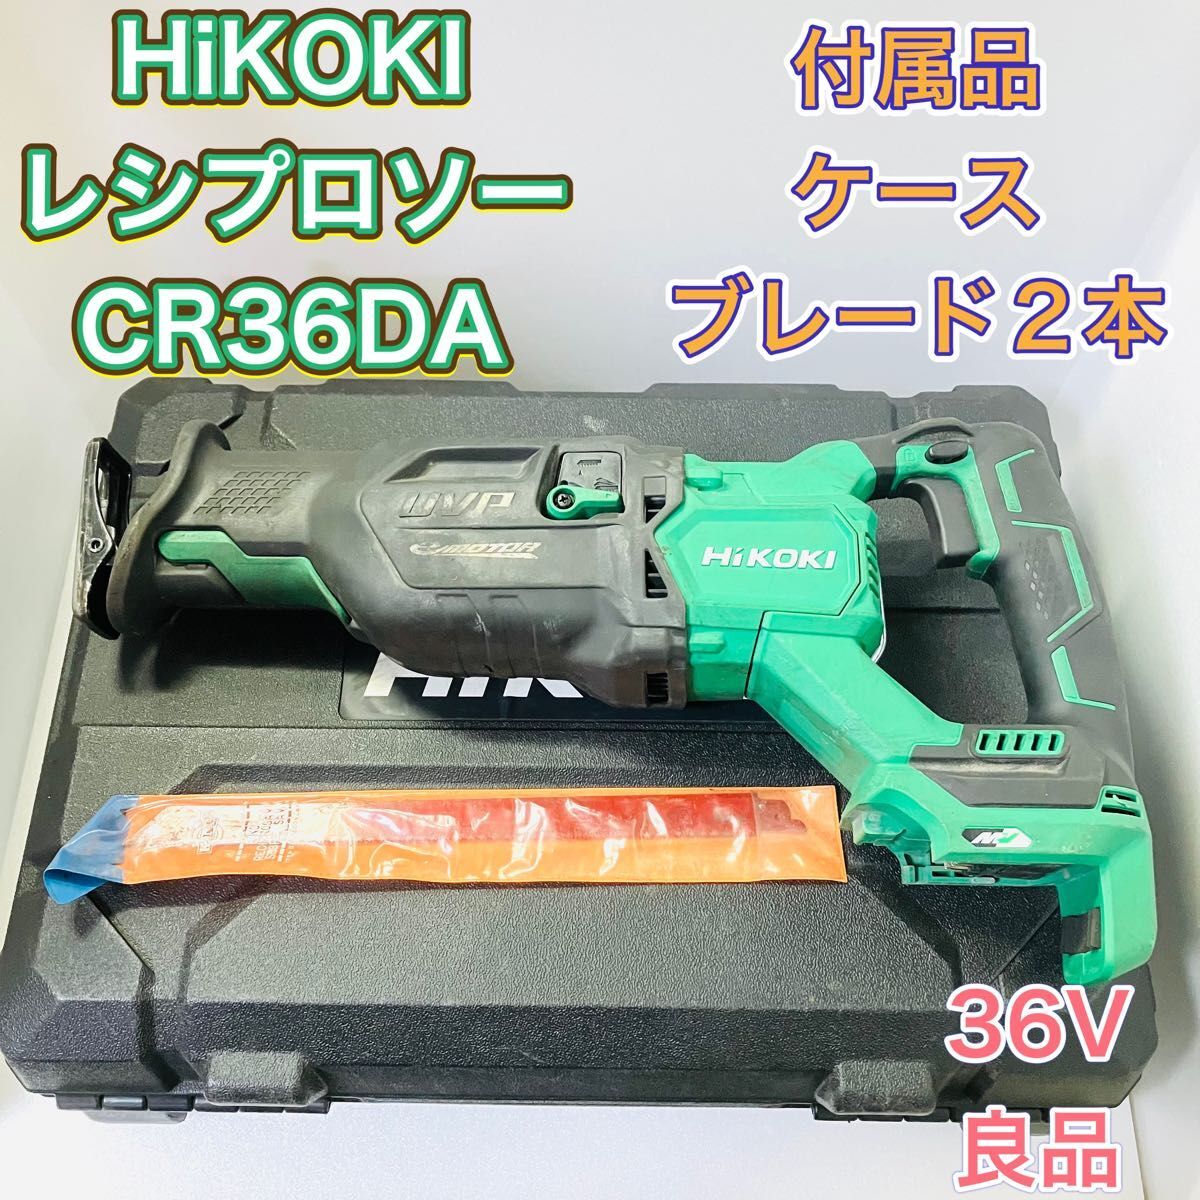 HiKOKI ハイコーキ CR36DA レシプロソー コードレスセーバソー 充電式 36V 切断工具 旧 日立工機 HITACHI グリーン 緑 DIY